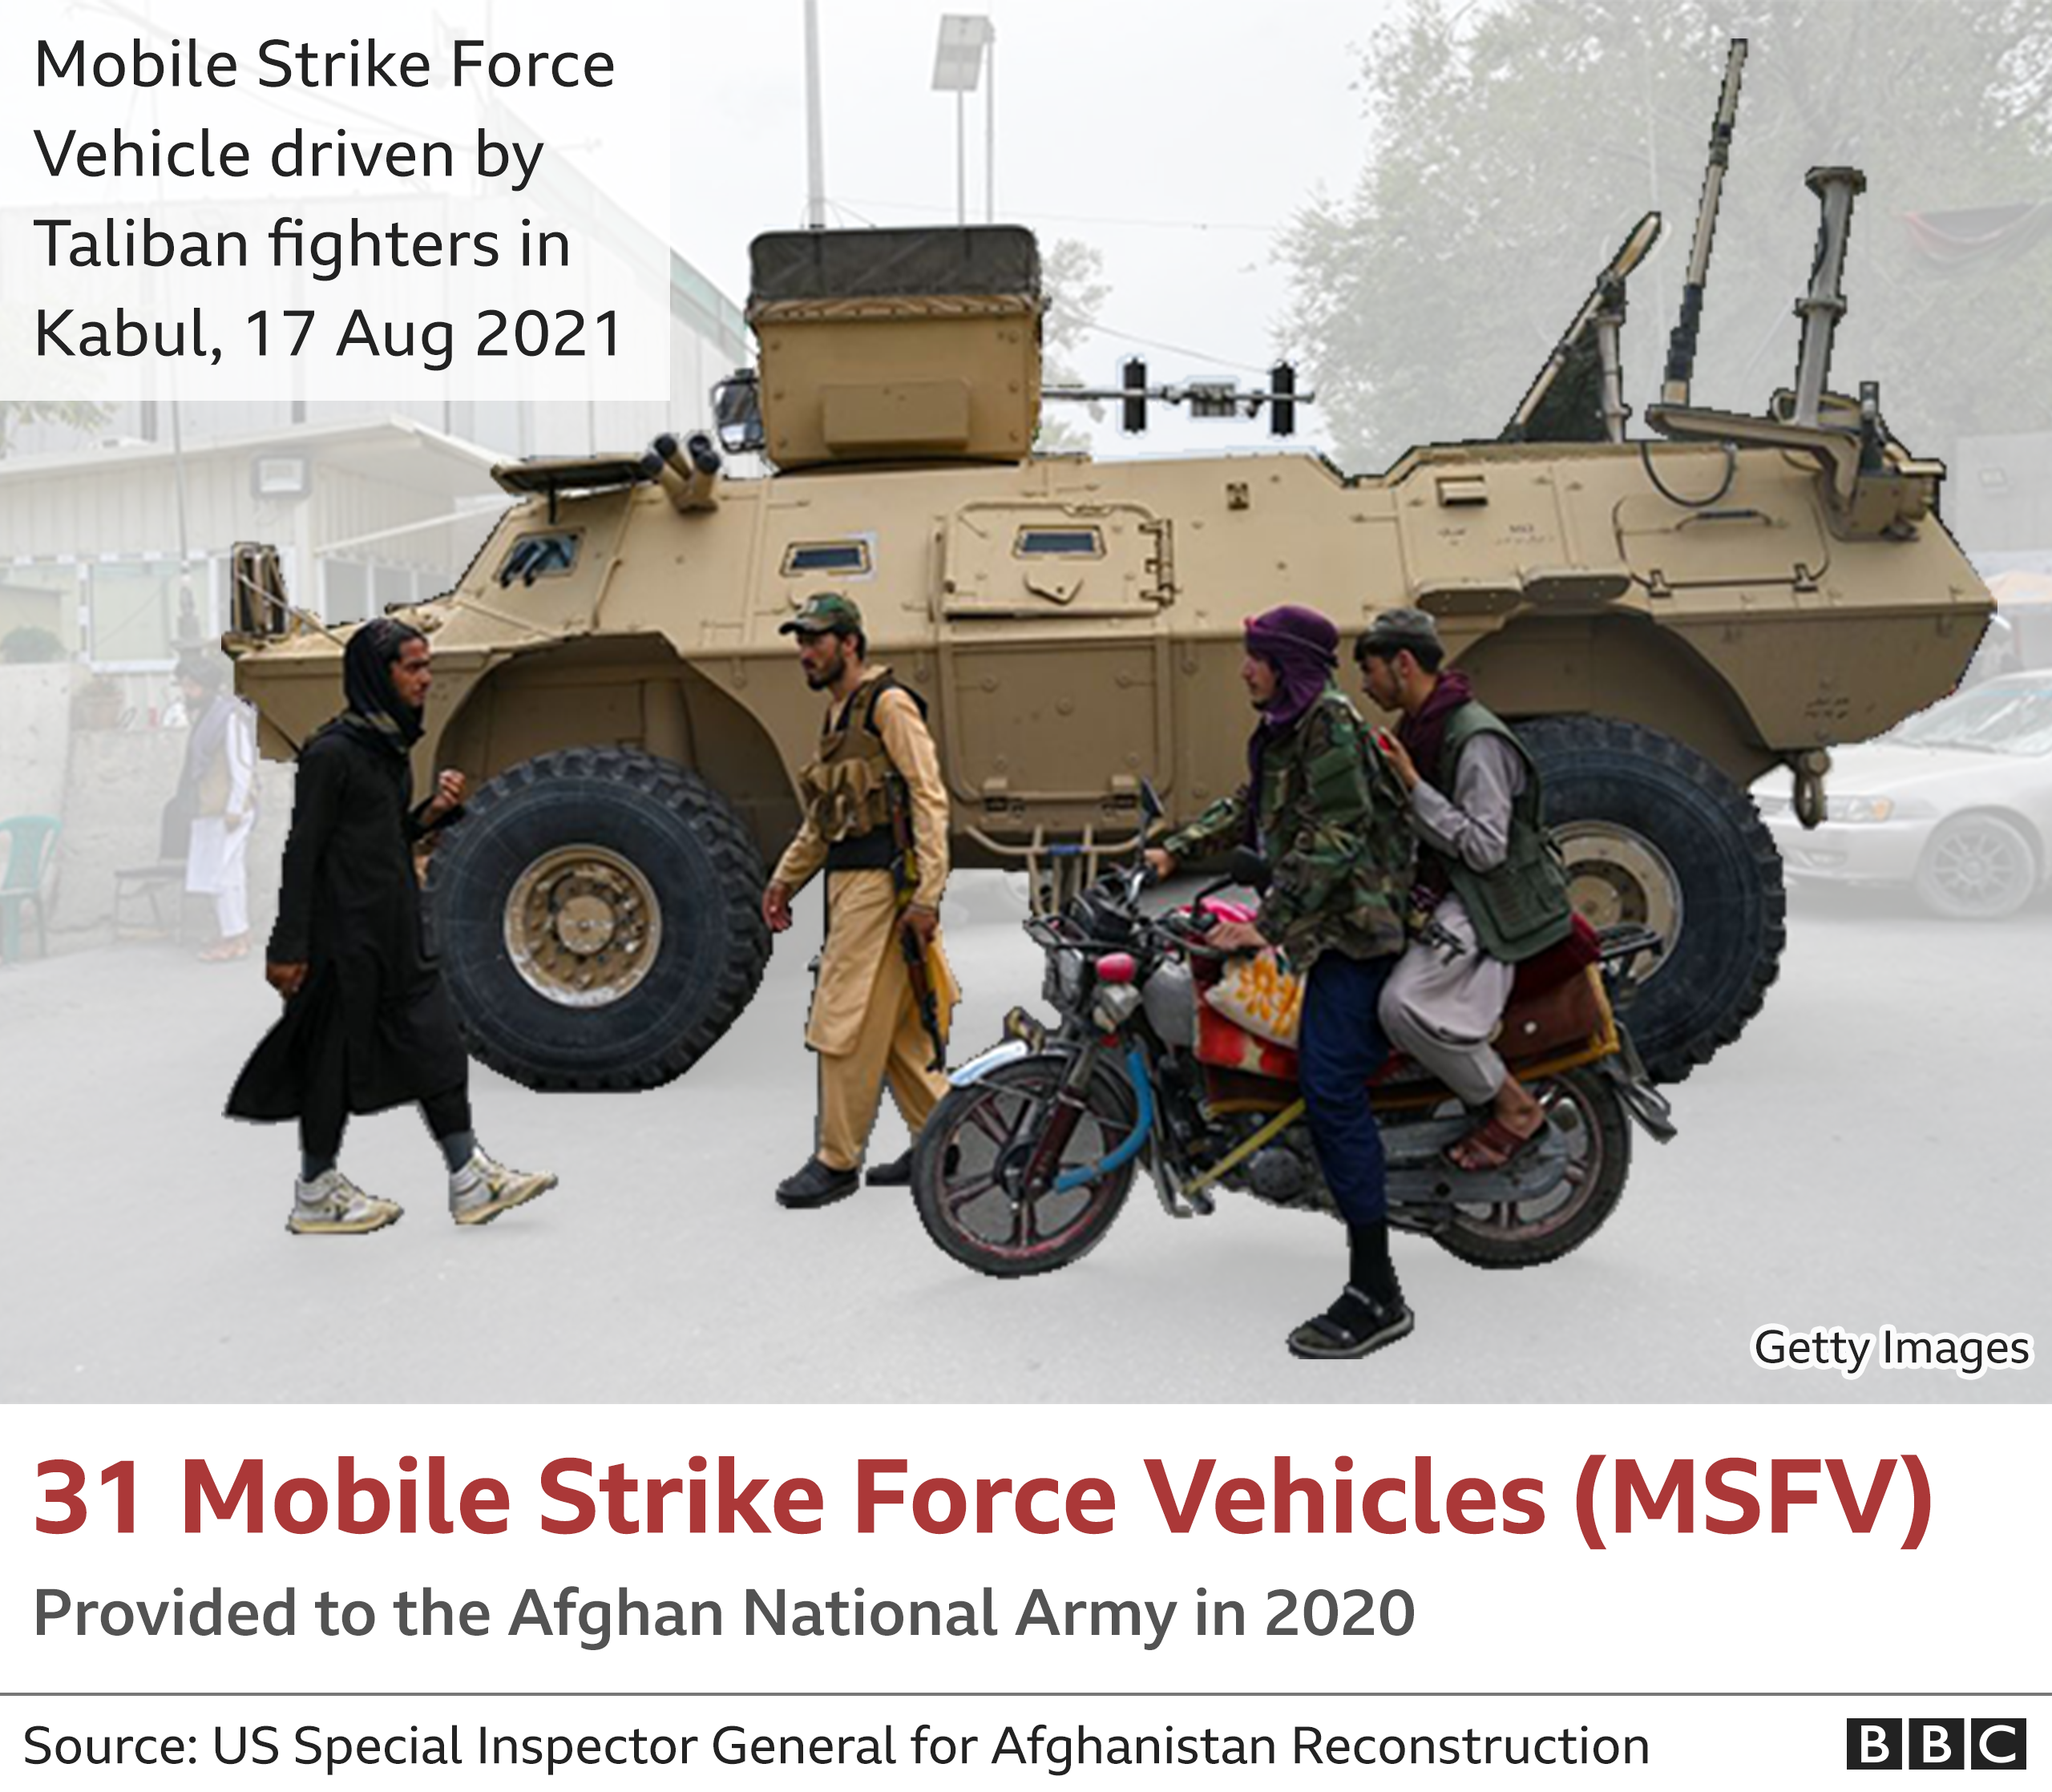 Image showing captured Mobile Strike Force Vehicle